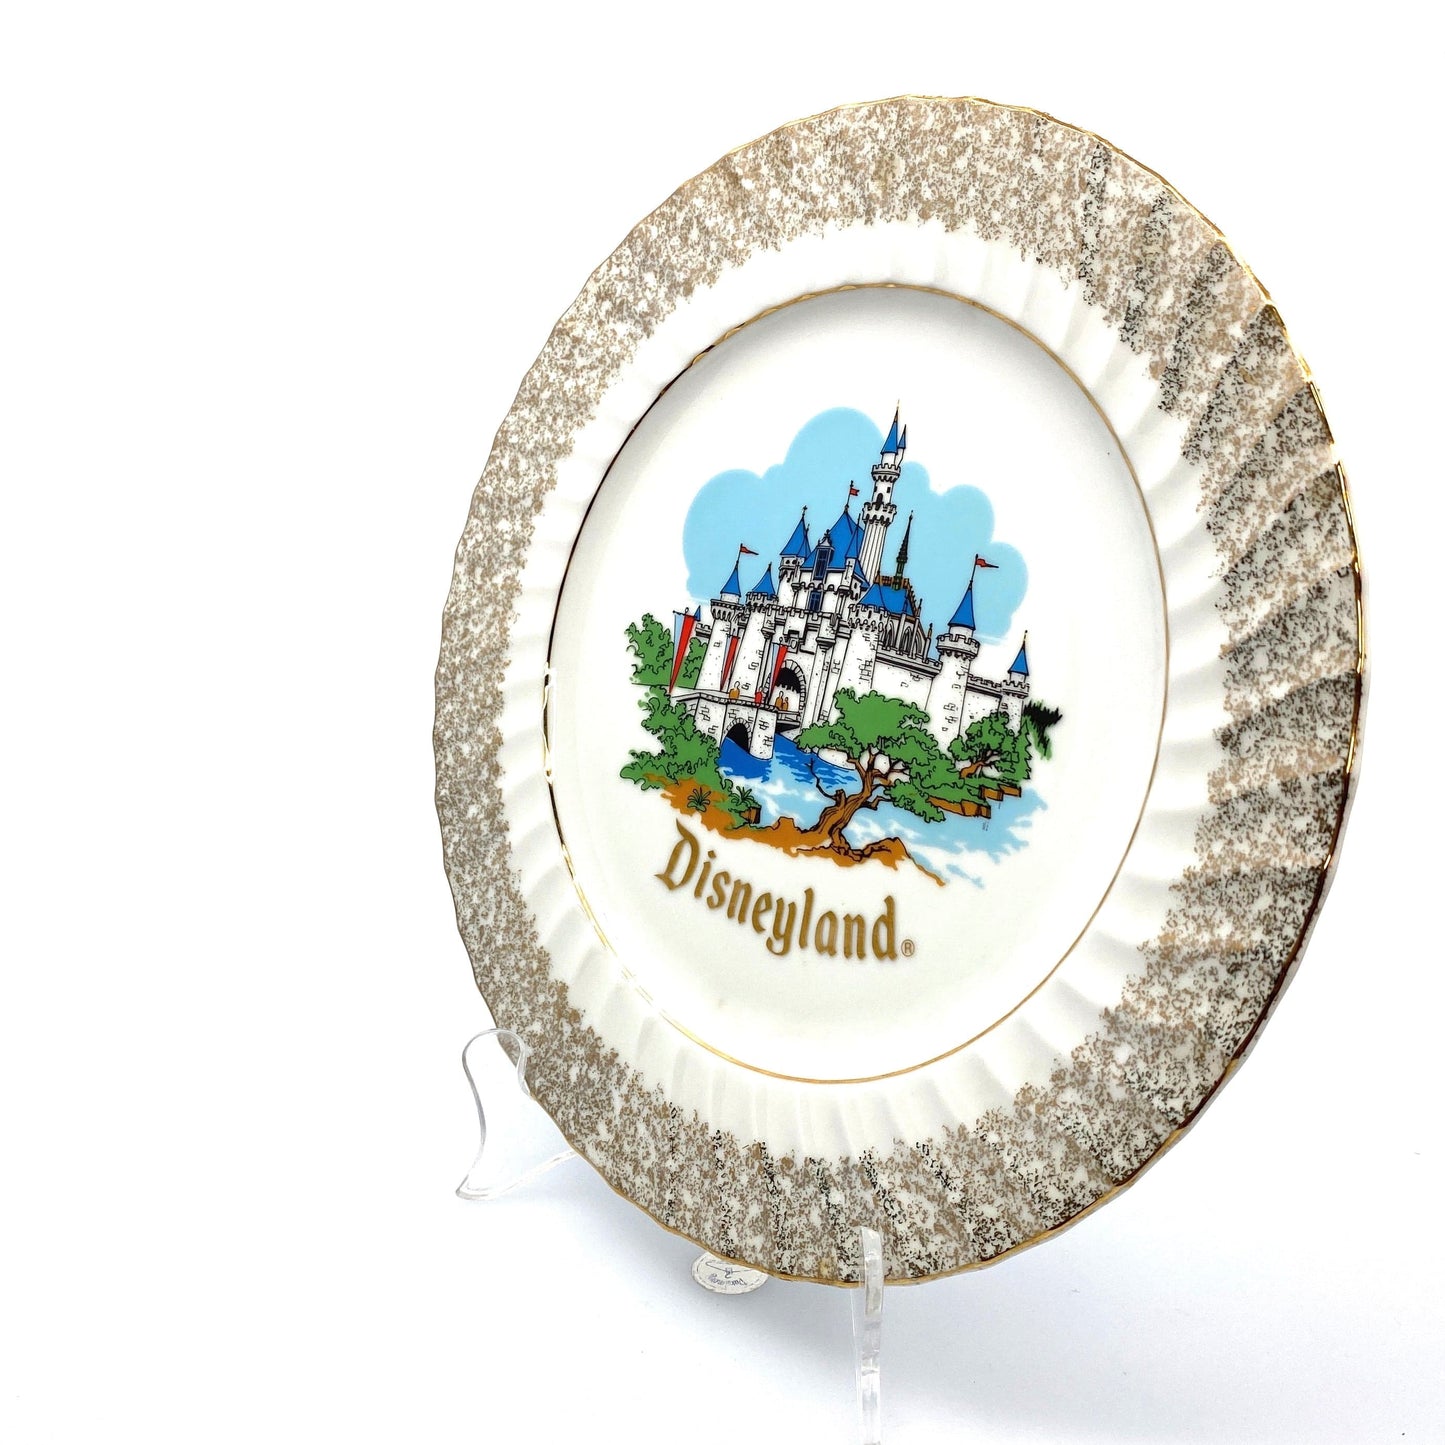 Vintage Disneyland Walt Disney Parks Collectible Souvenir Collectible Plate, White - 8” EUC